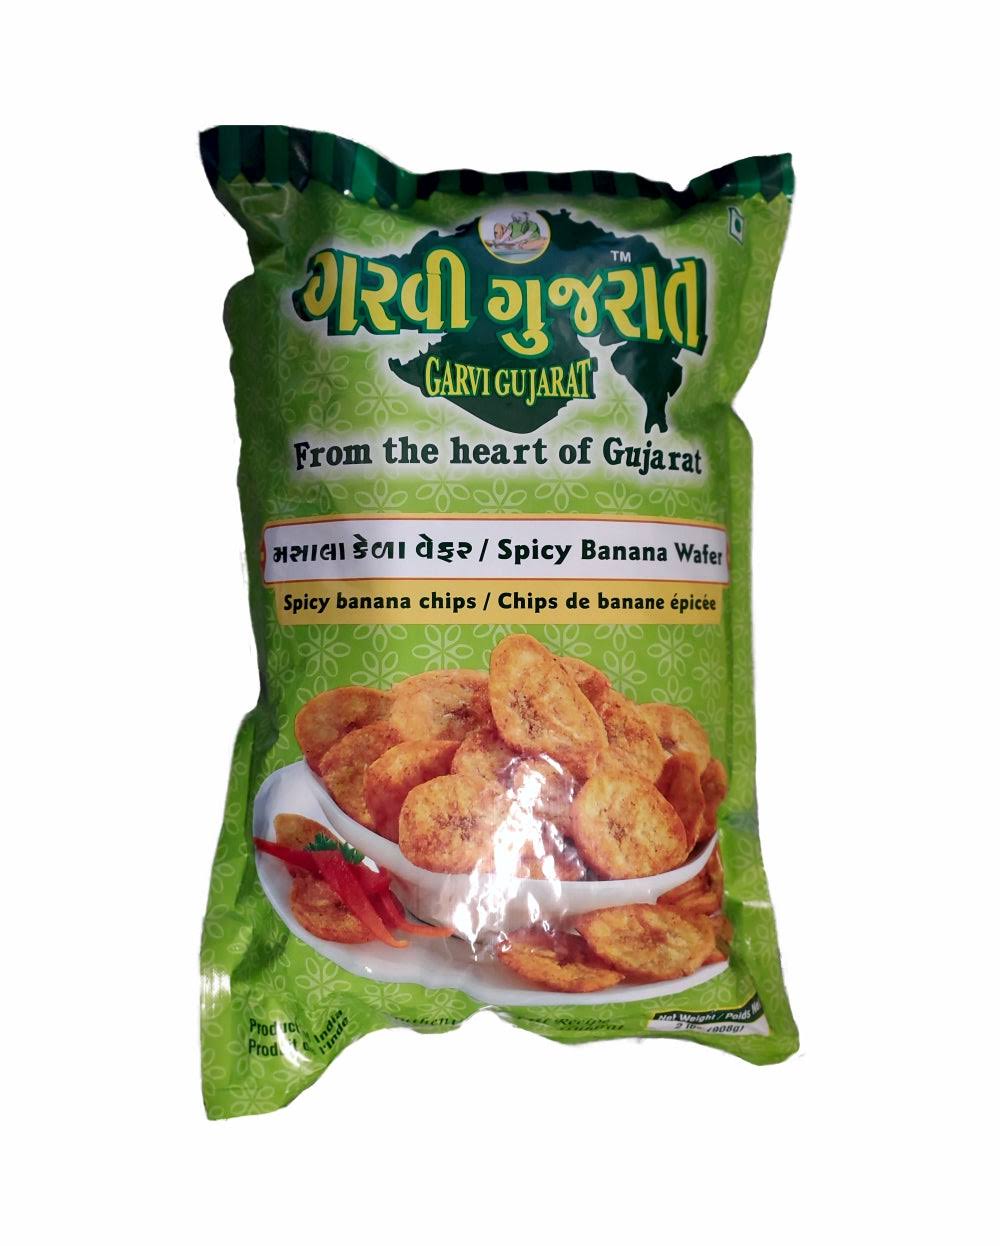 Garvi Gujarat Spicy Banana Wafer - 2 lb